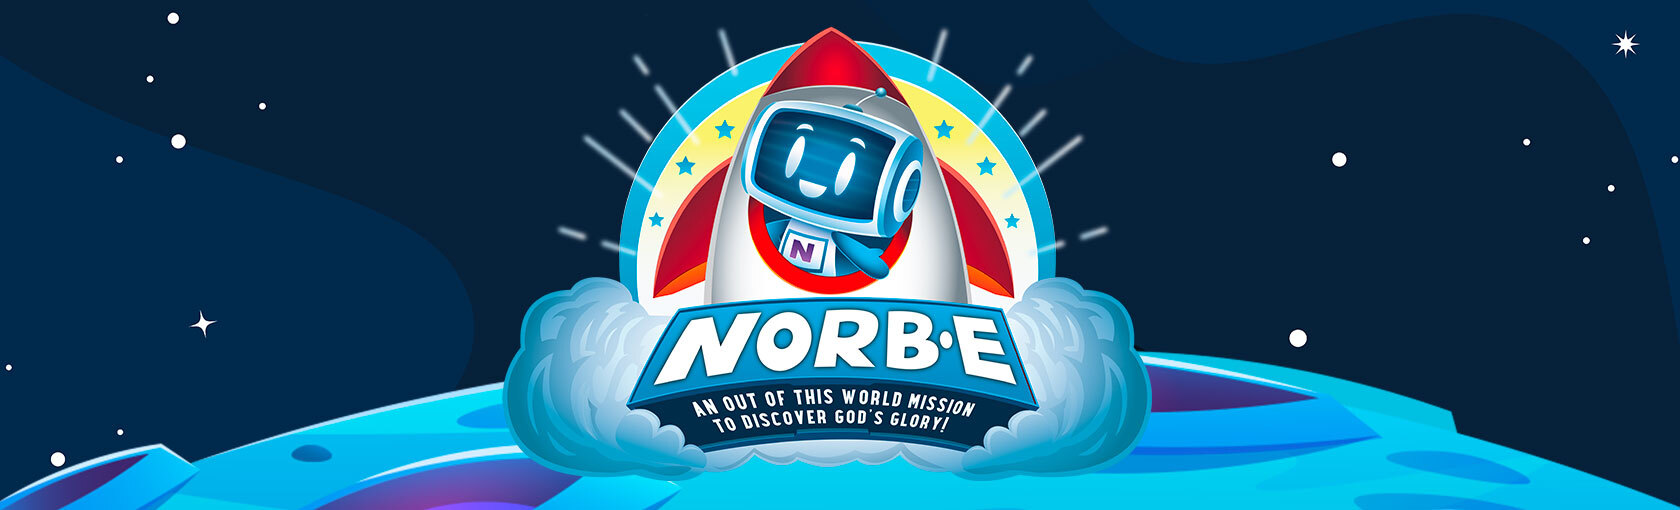 NORB-E